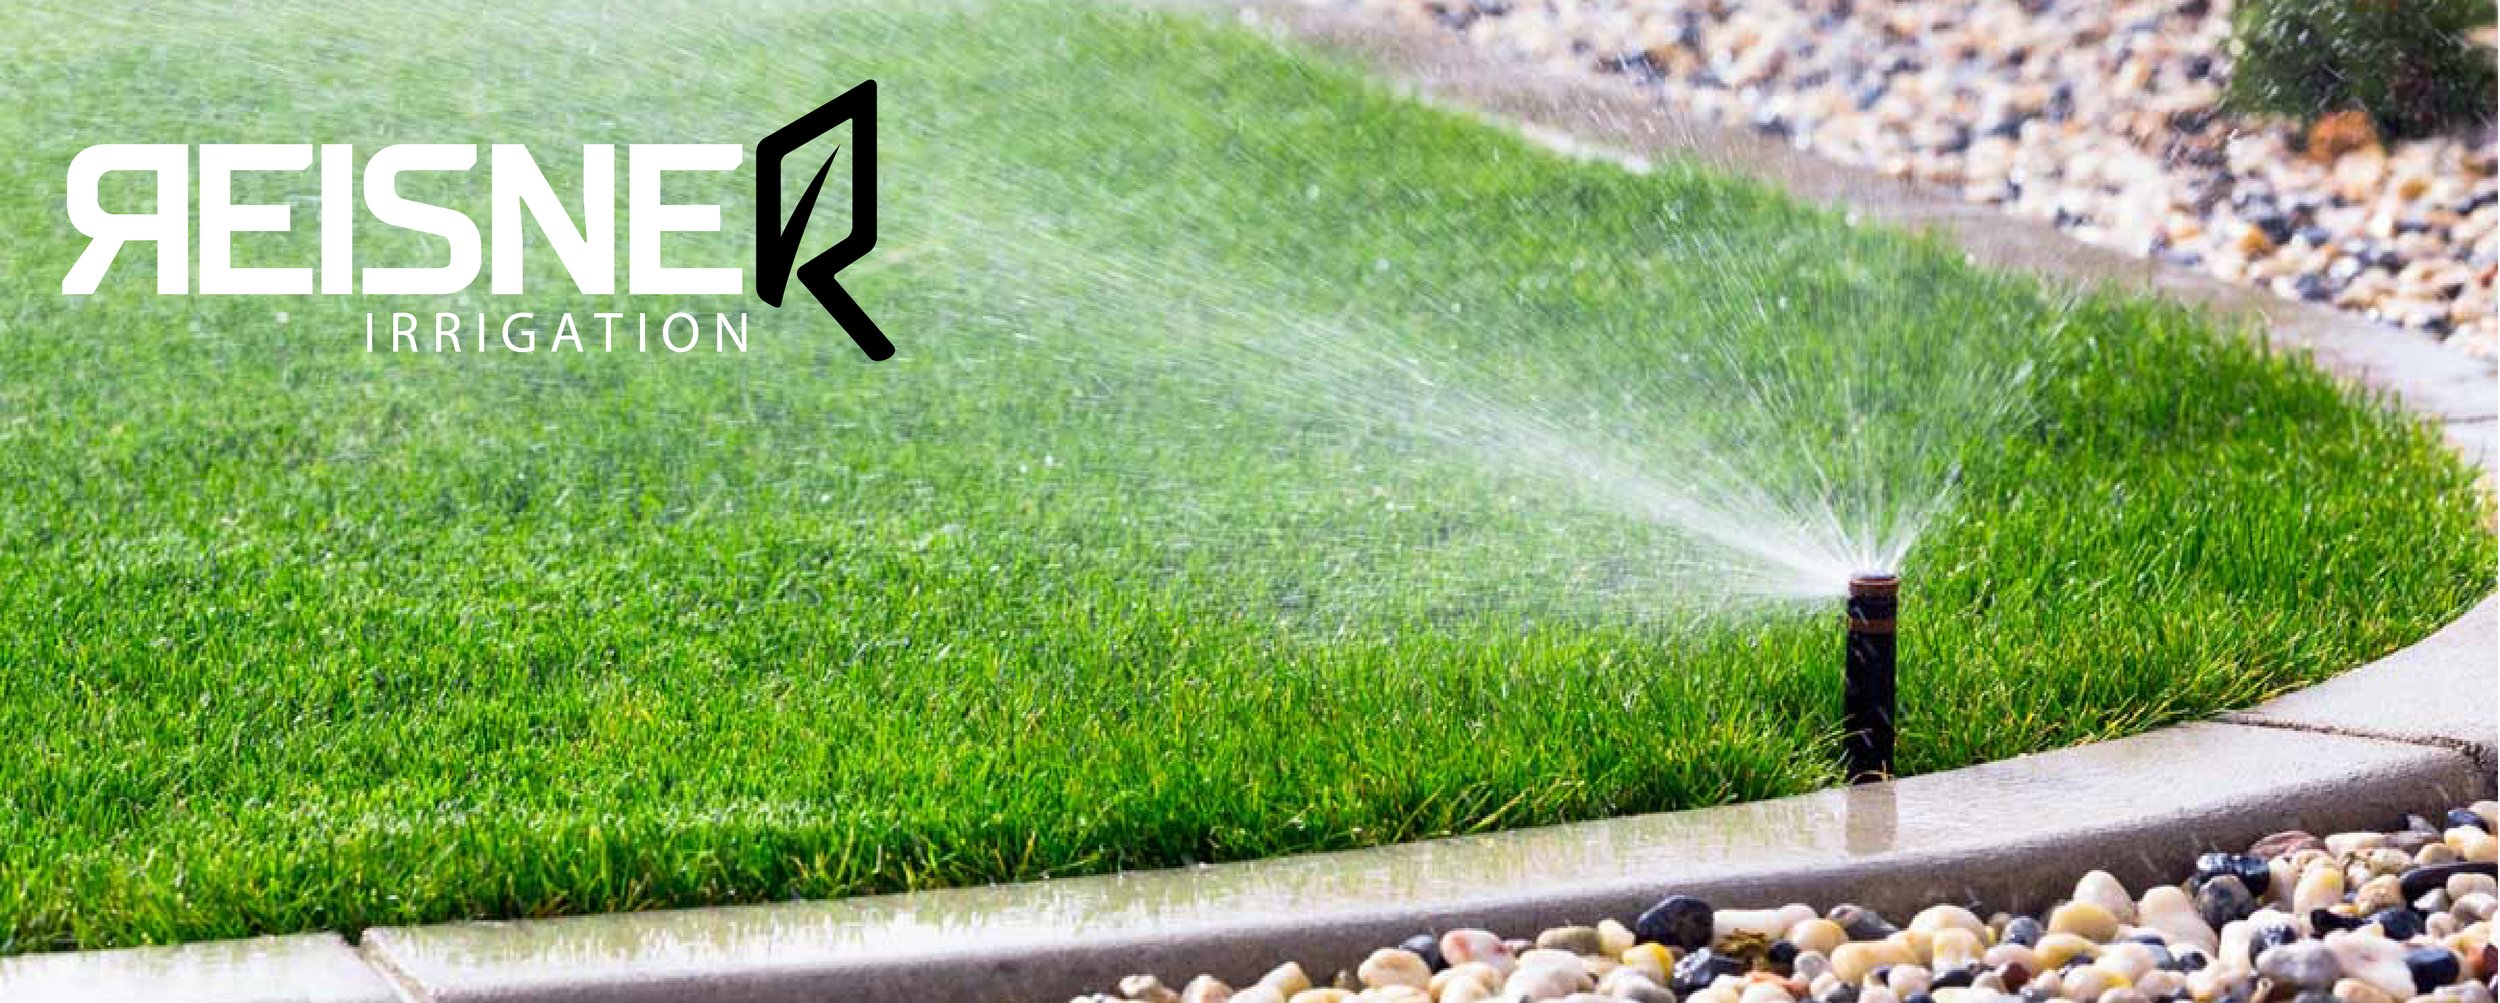 Reisner Irrigation w-Logo.jpg